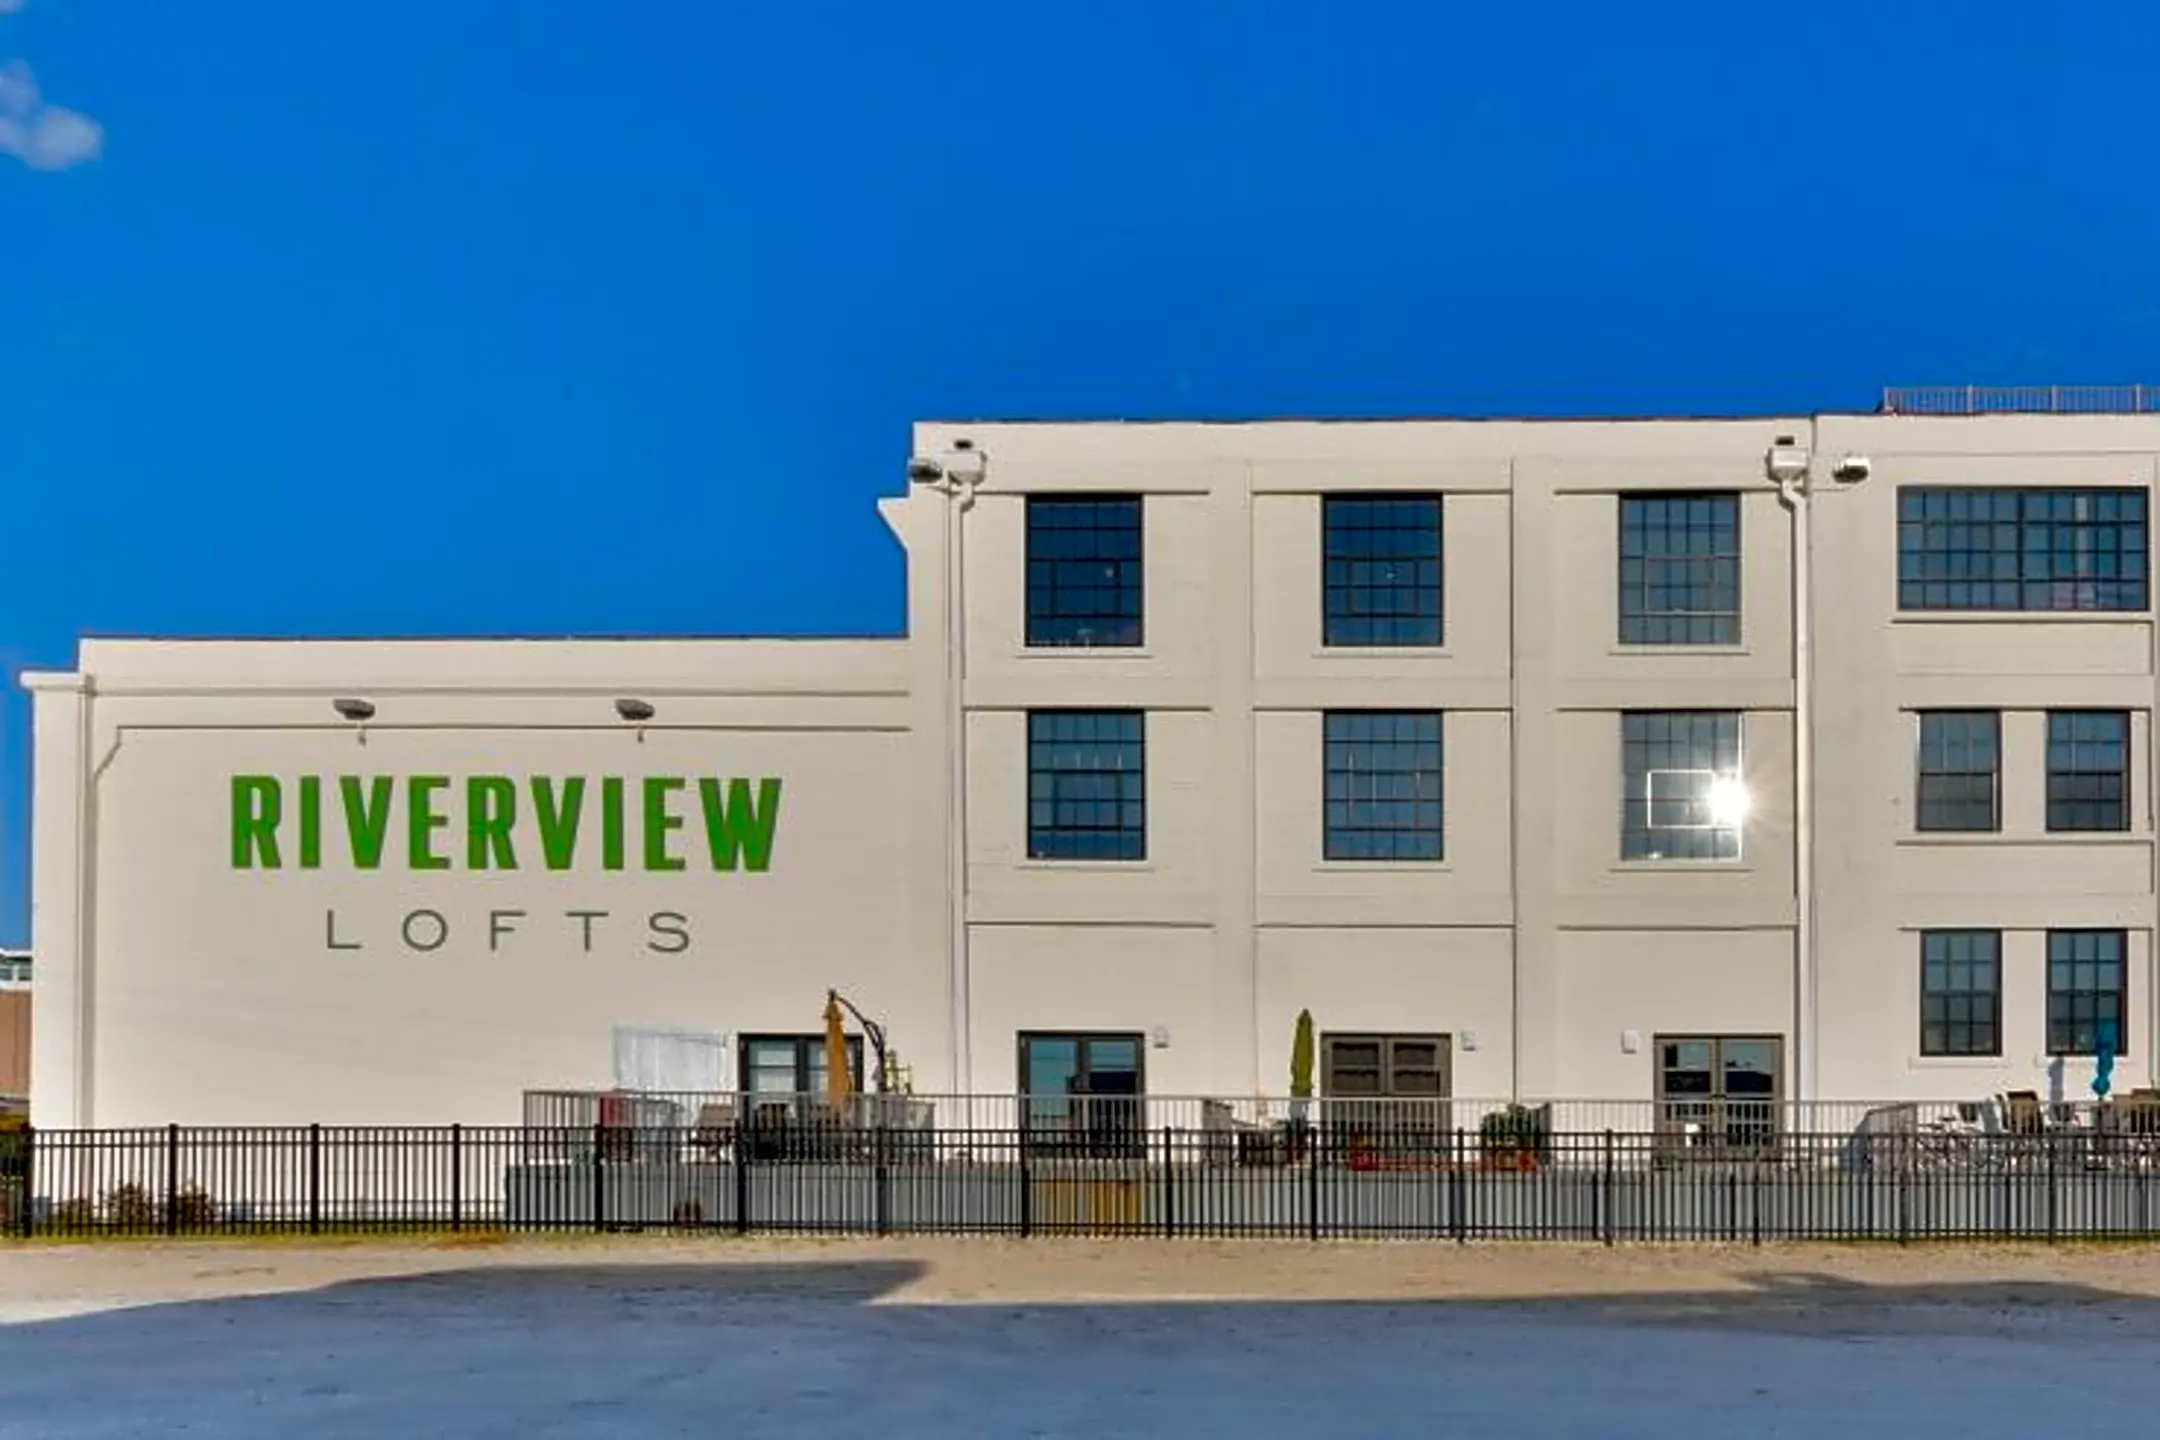 Building - Riverview Lofts - Norfolk, VA